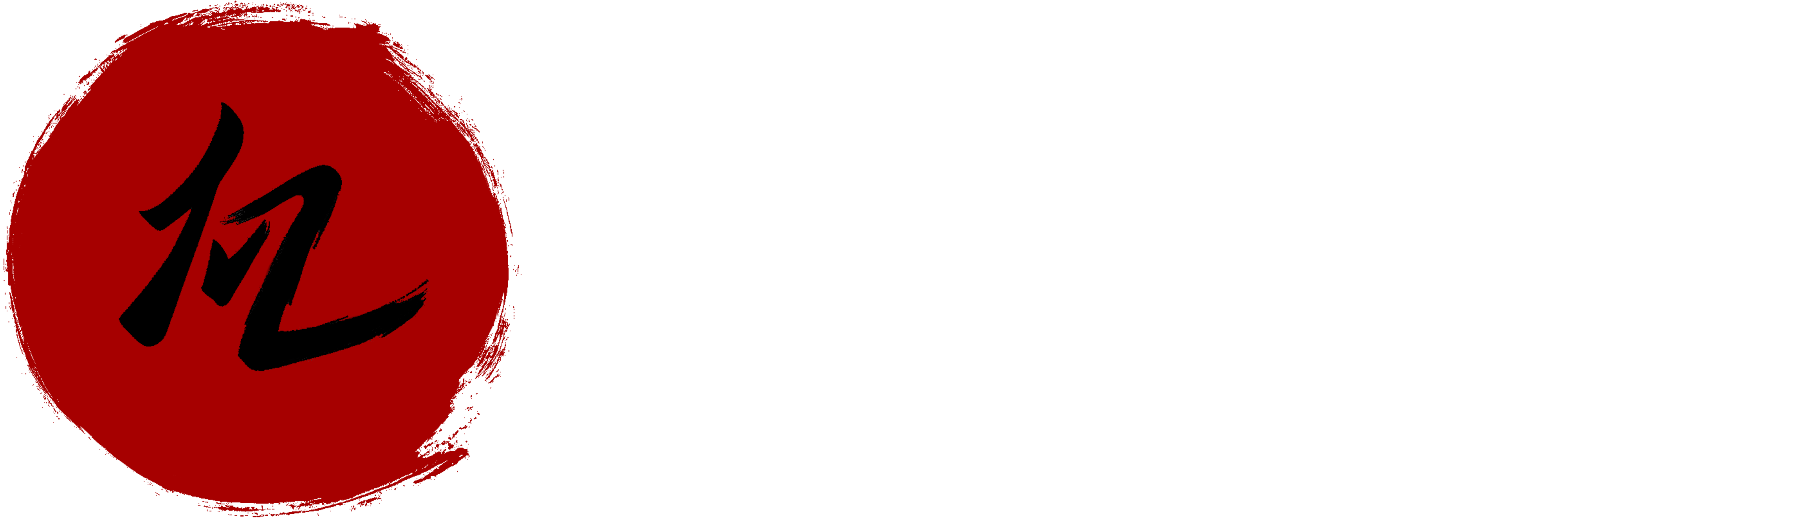 Moseley Music Media